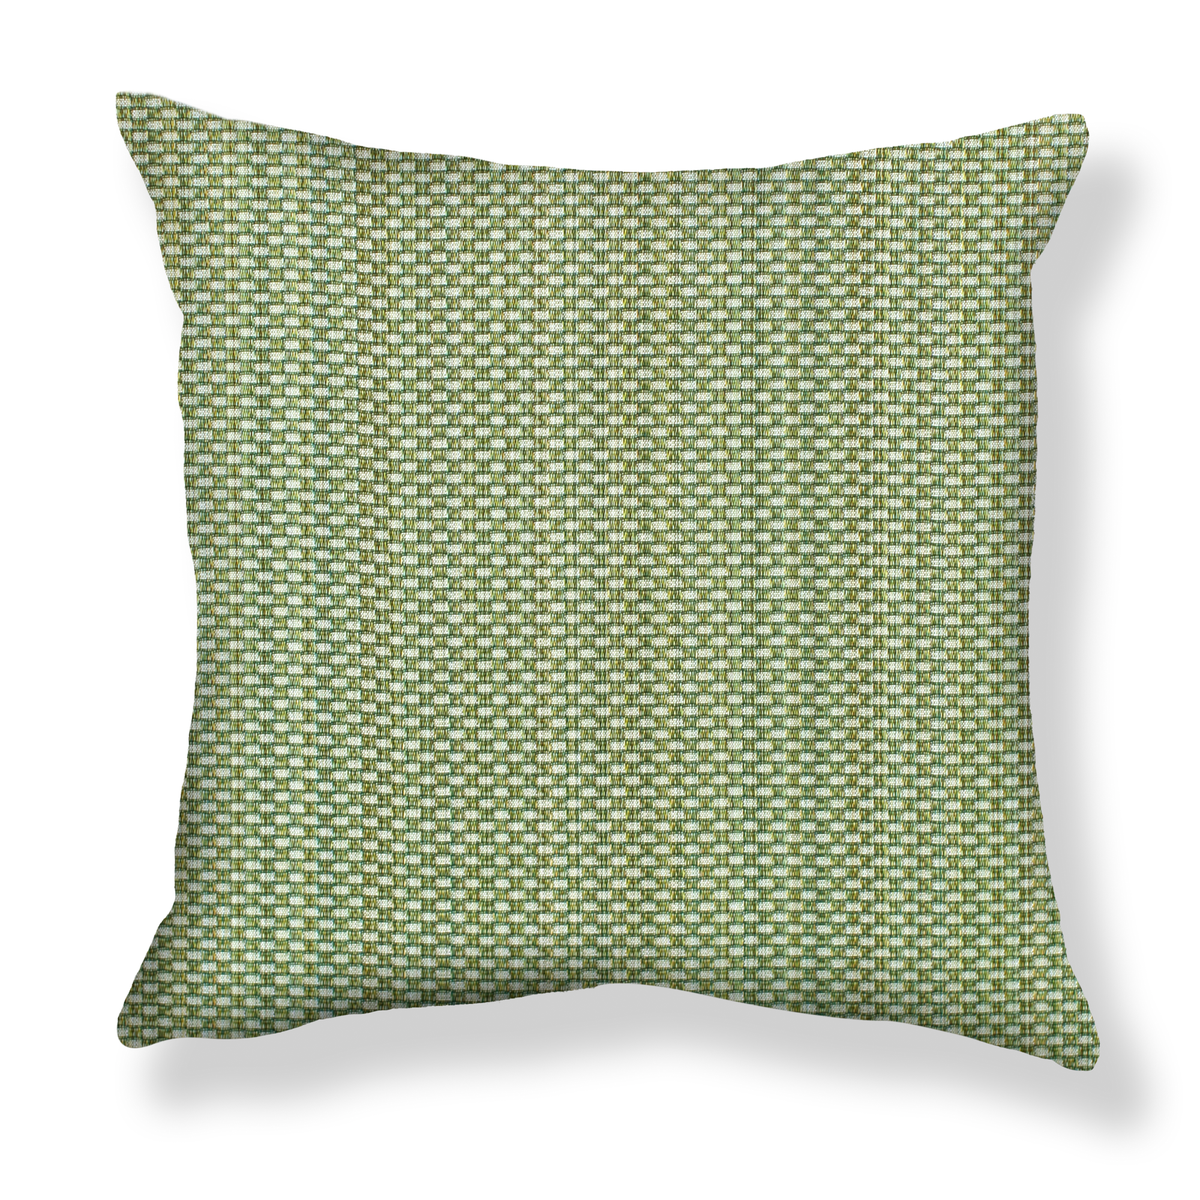 Channels Pillow in Green